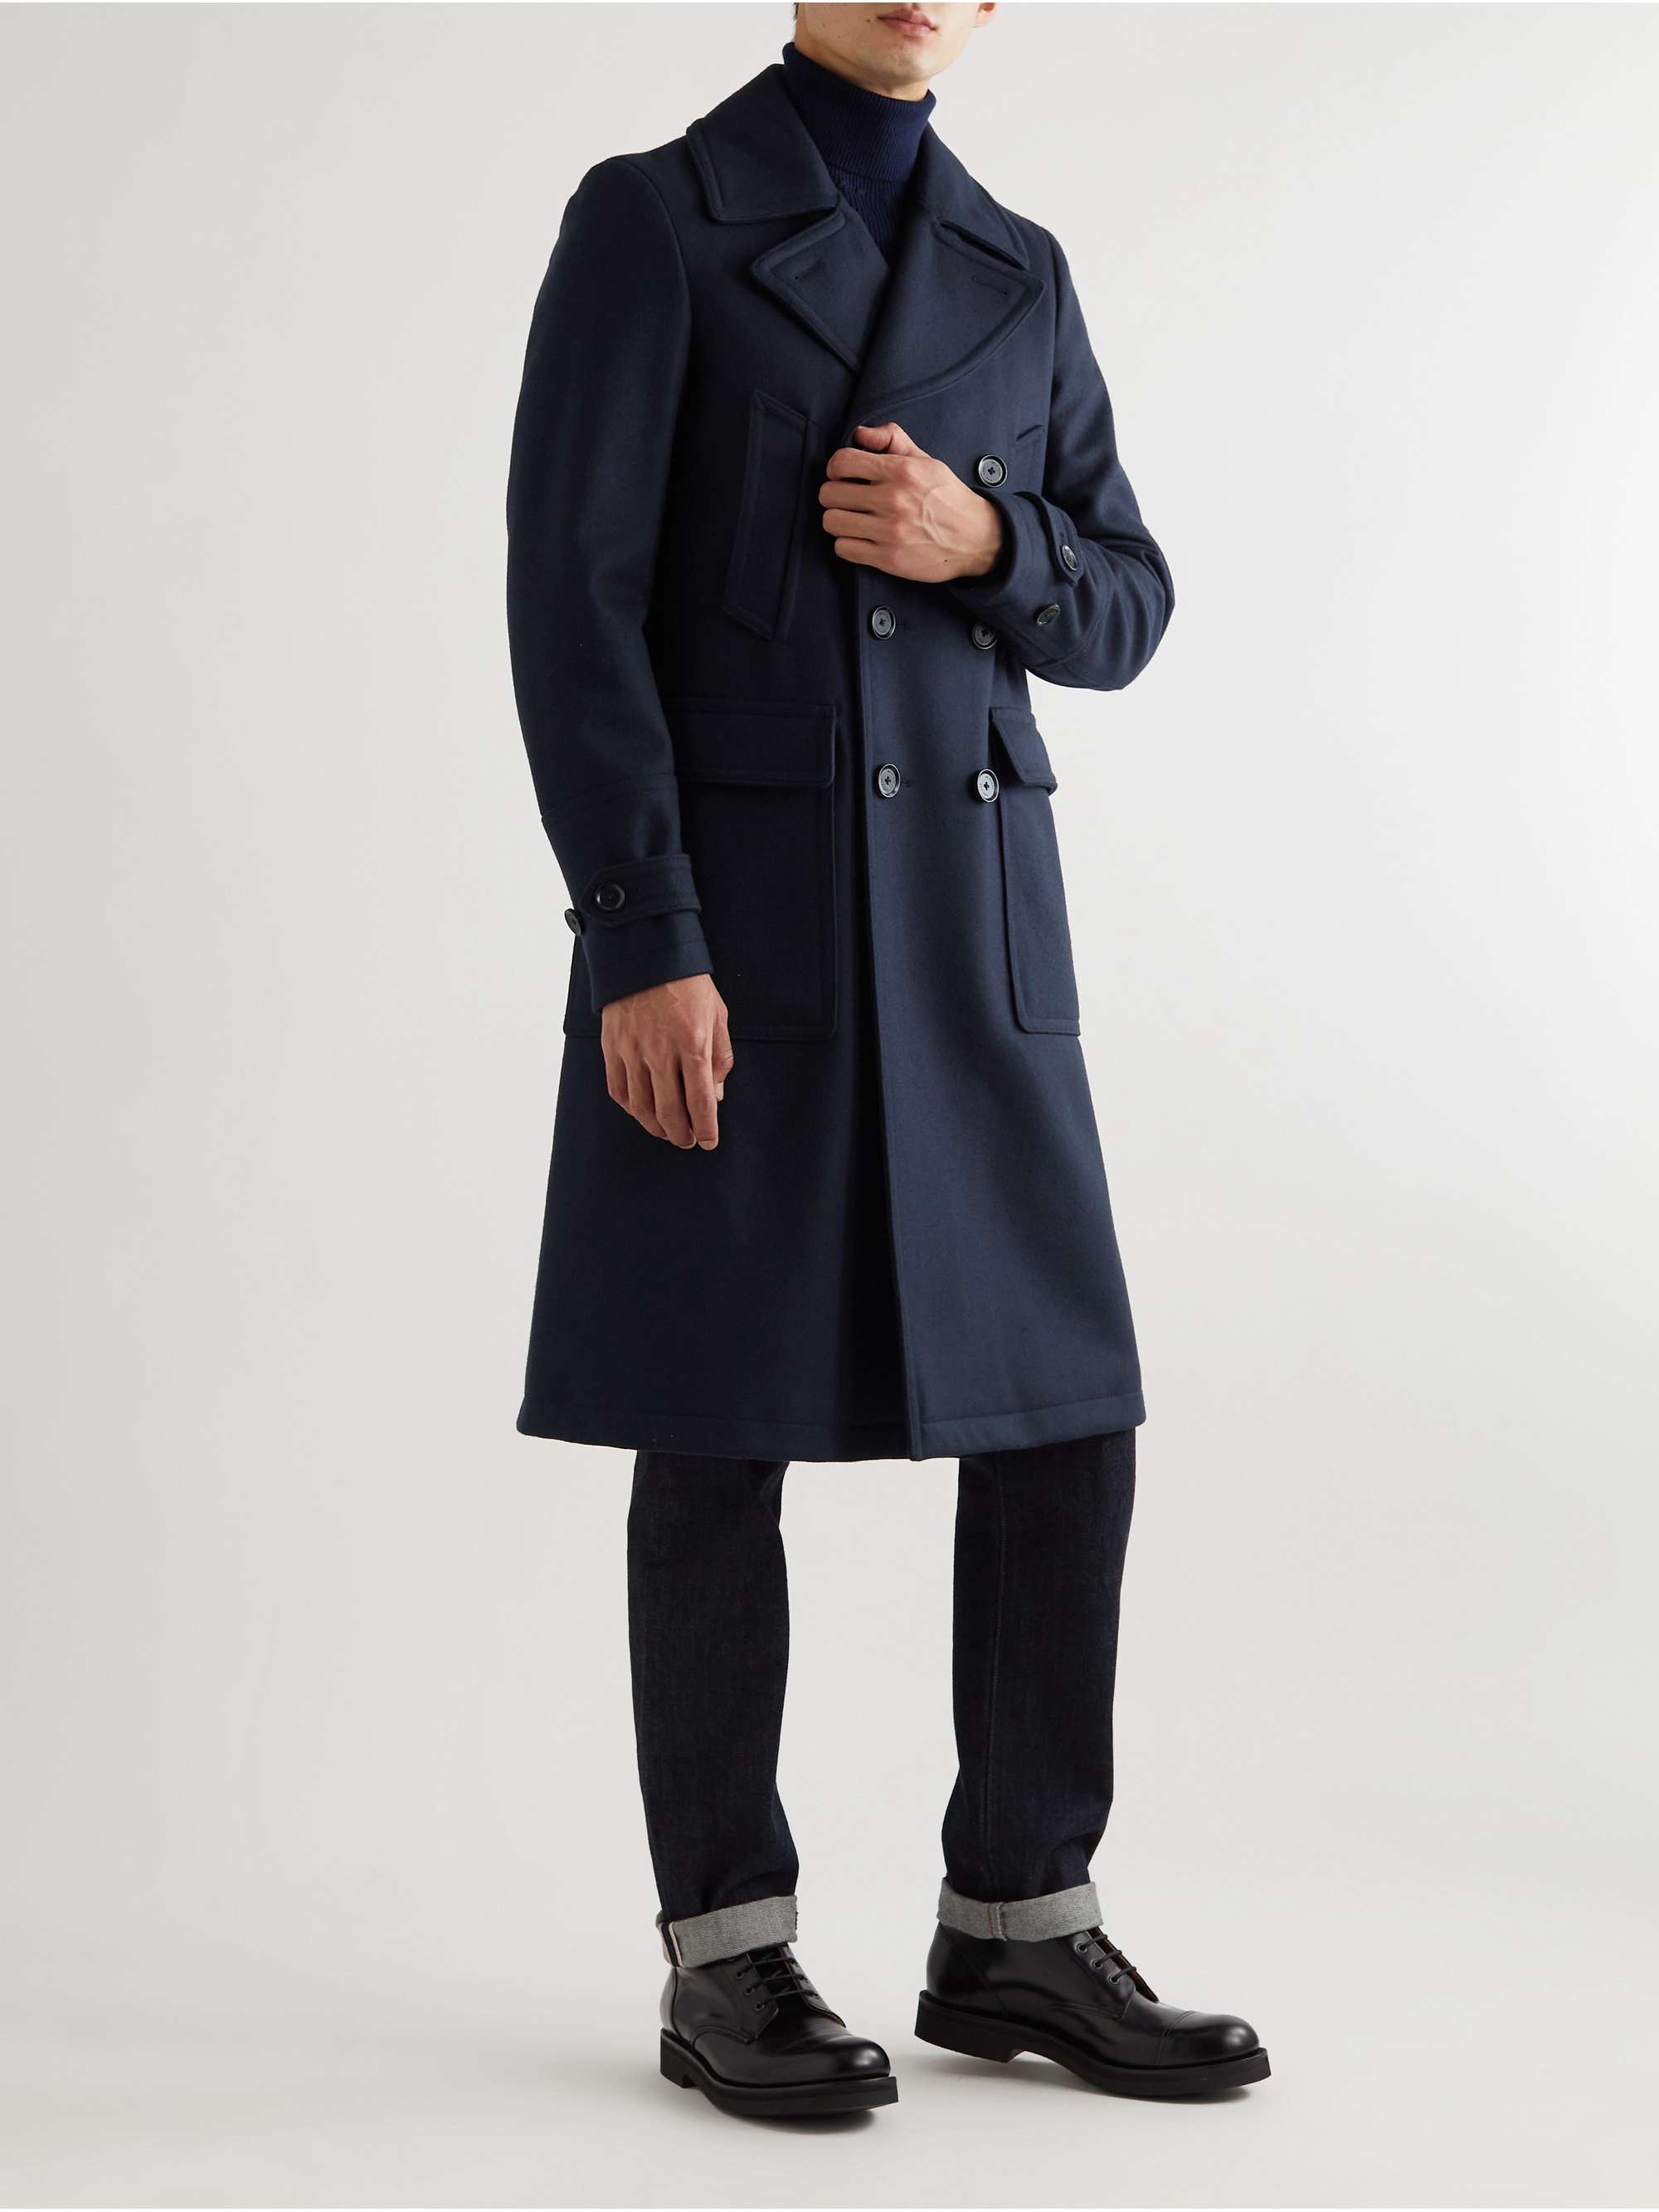 BELSTAFF Milford Double-Breasted Wool-Blend Coat for Men | MR PORTER